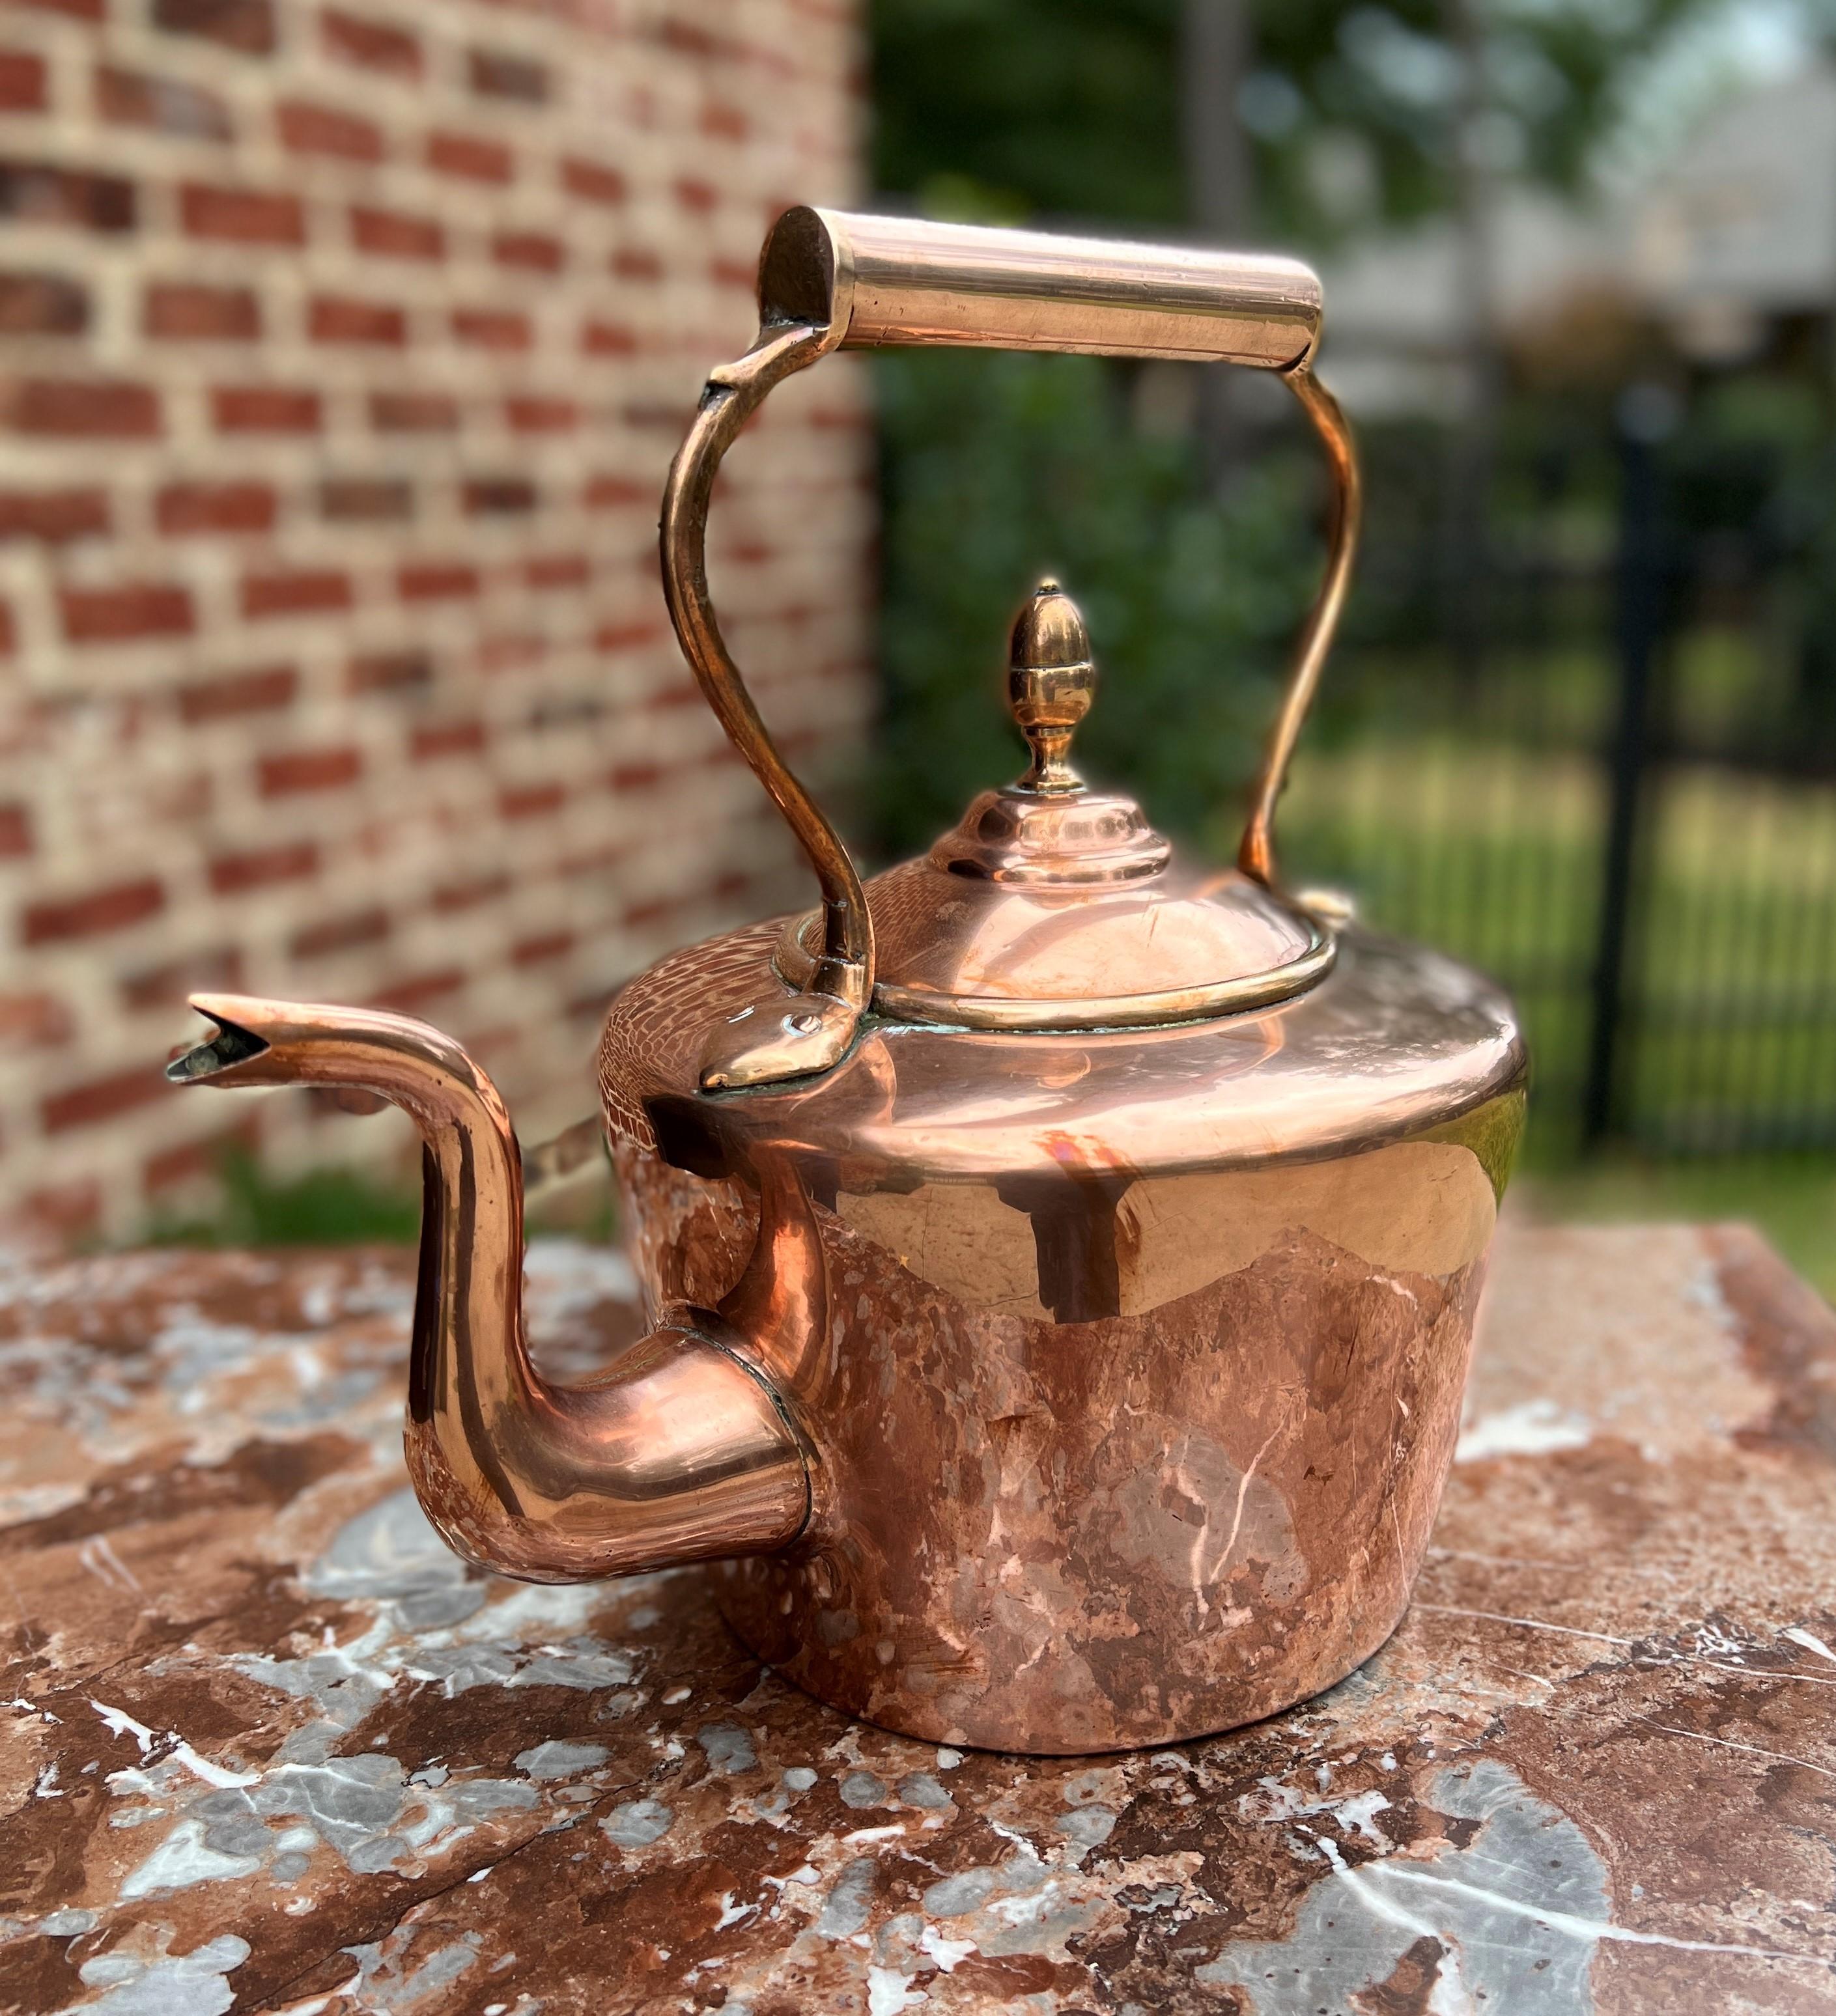 British Colonial Antique English Copper Brass Tea Kettle Coffee Pitcher Spout Handle #1 c. 1900